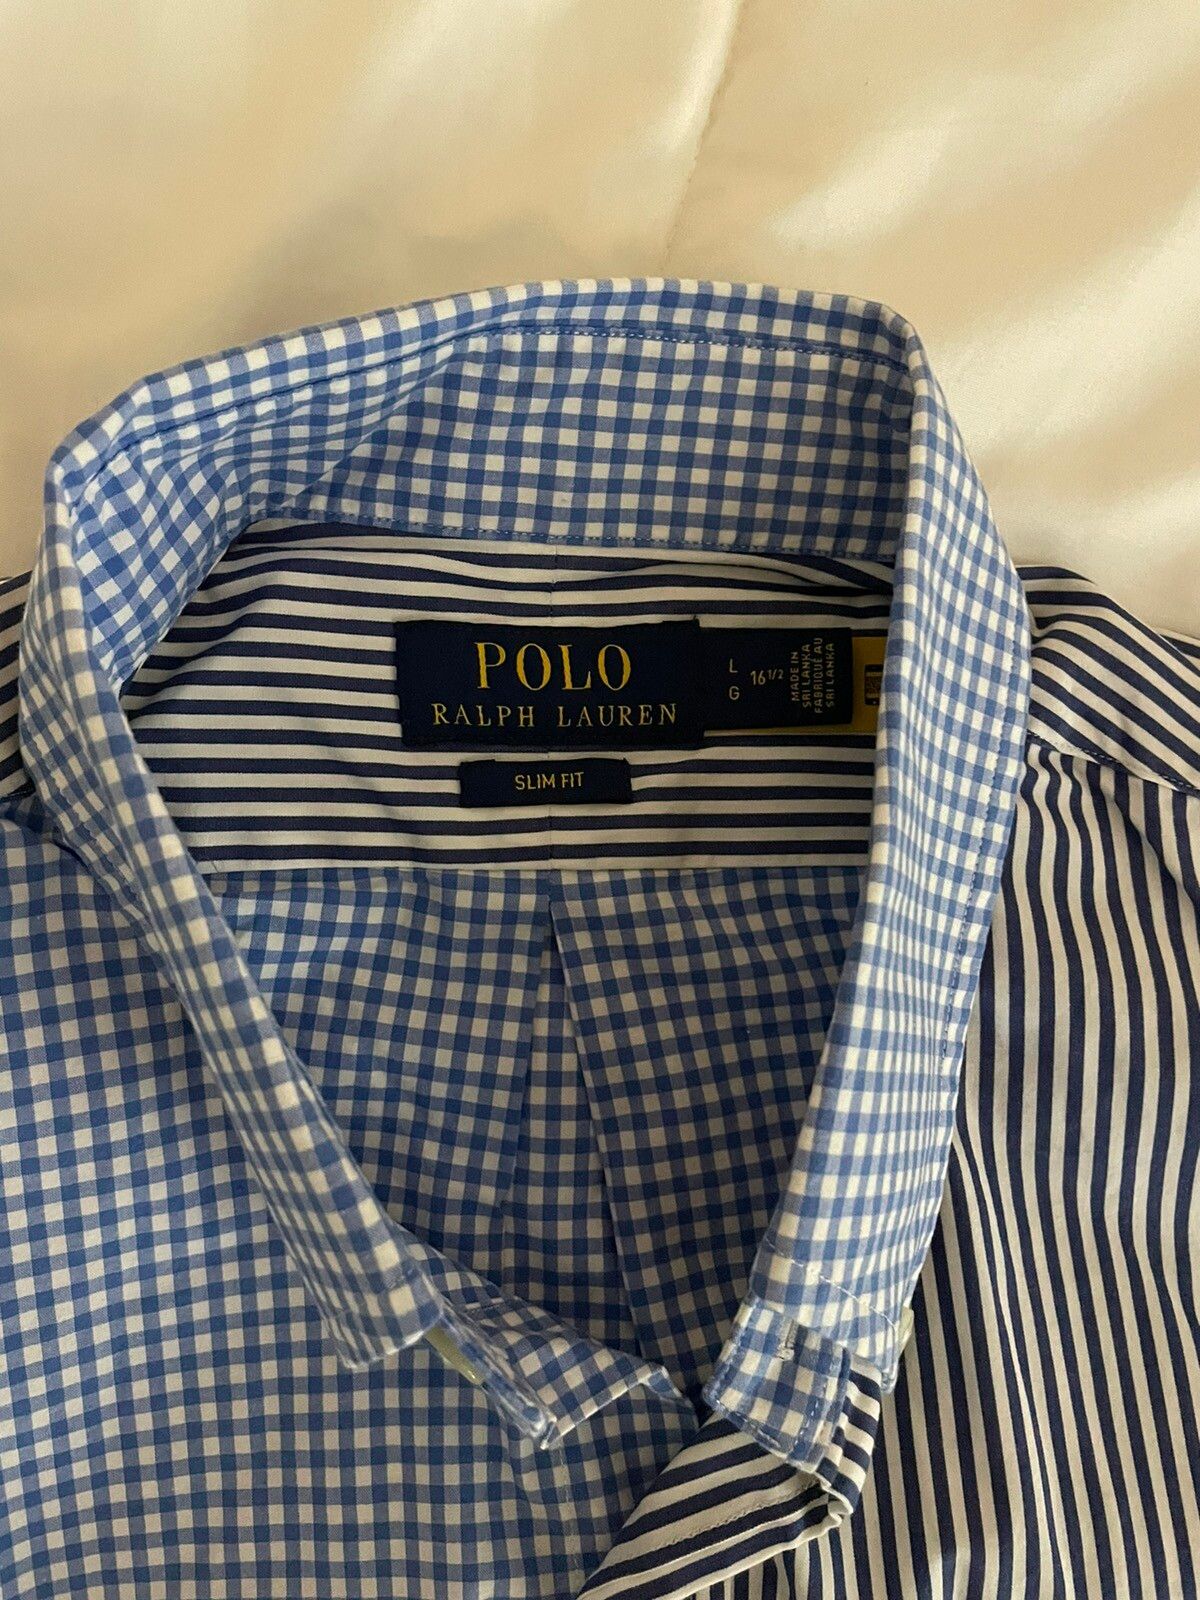 Polo Ralph Lauren Polo Ralph Lauren Patchwork Shirt Size US L / EU 52-54 / 3 - 2 Preview